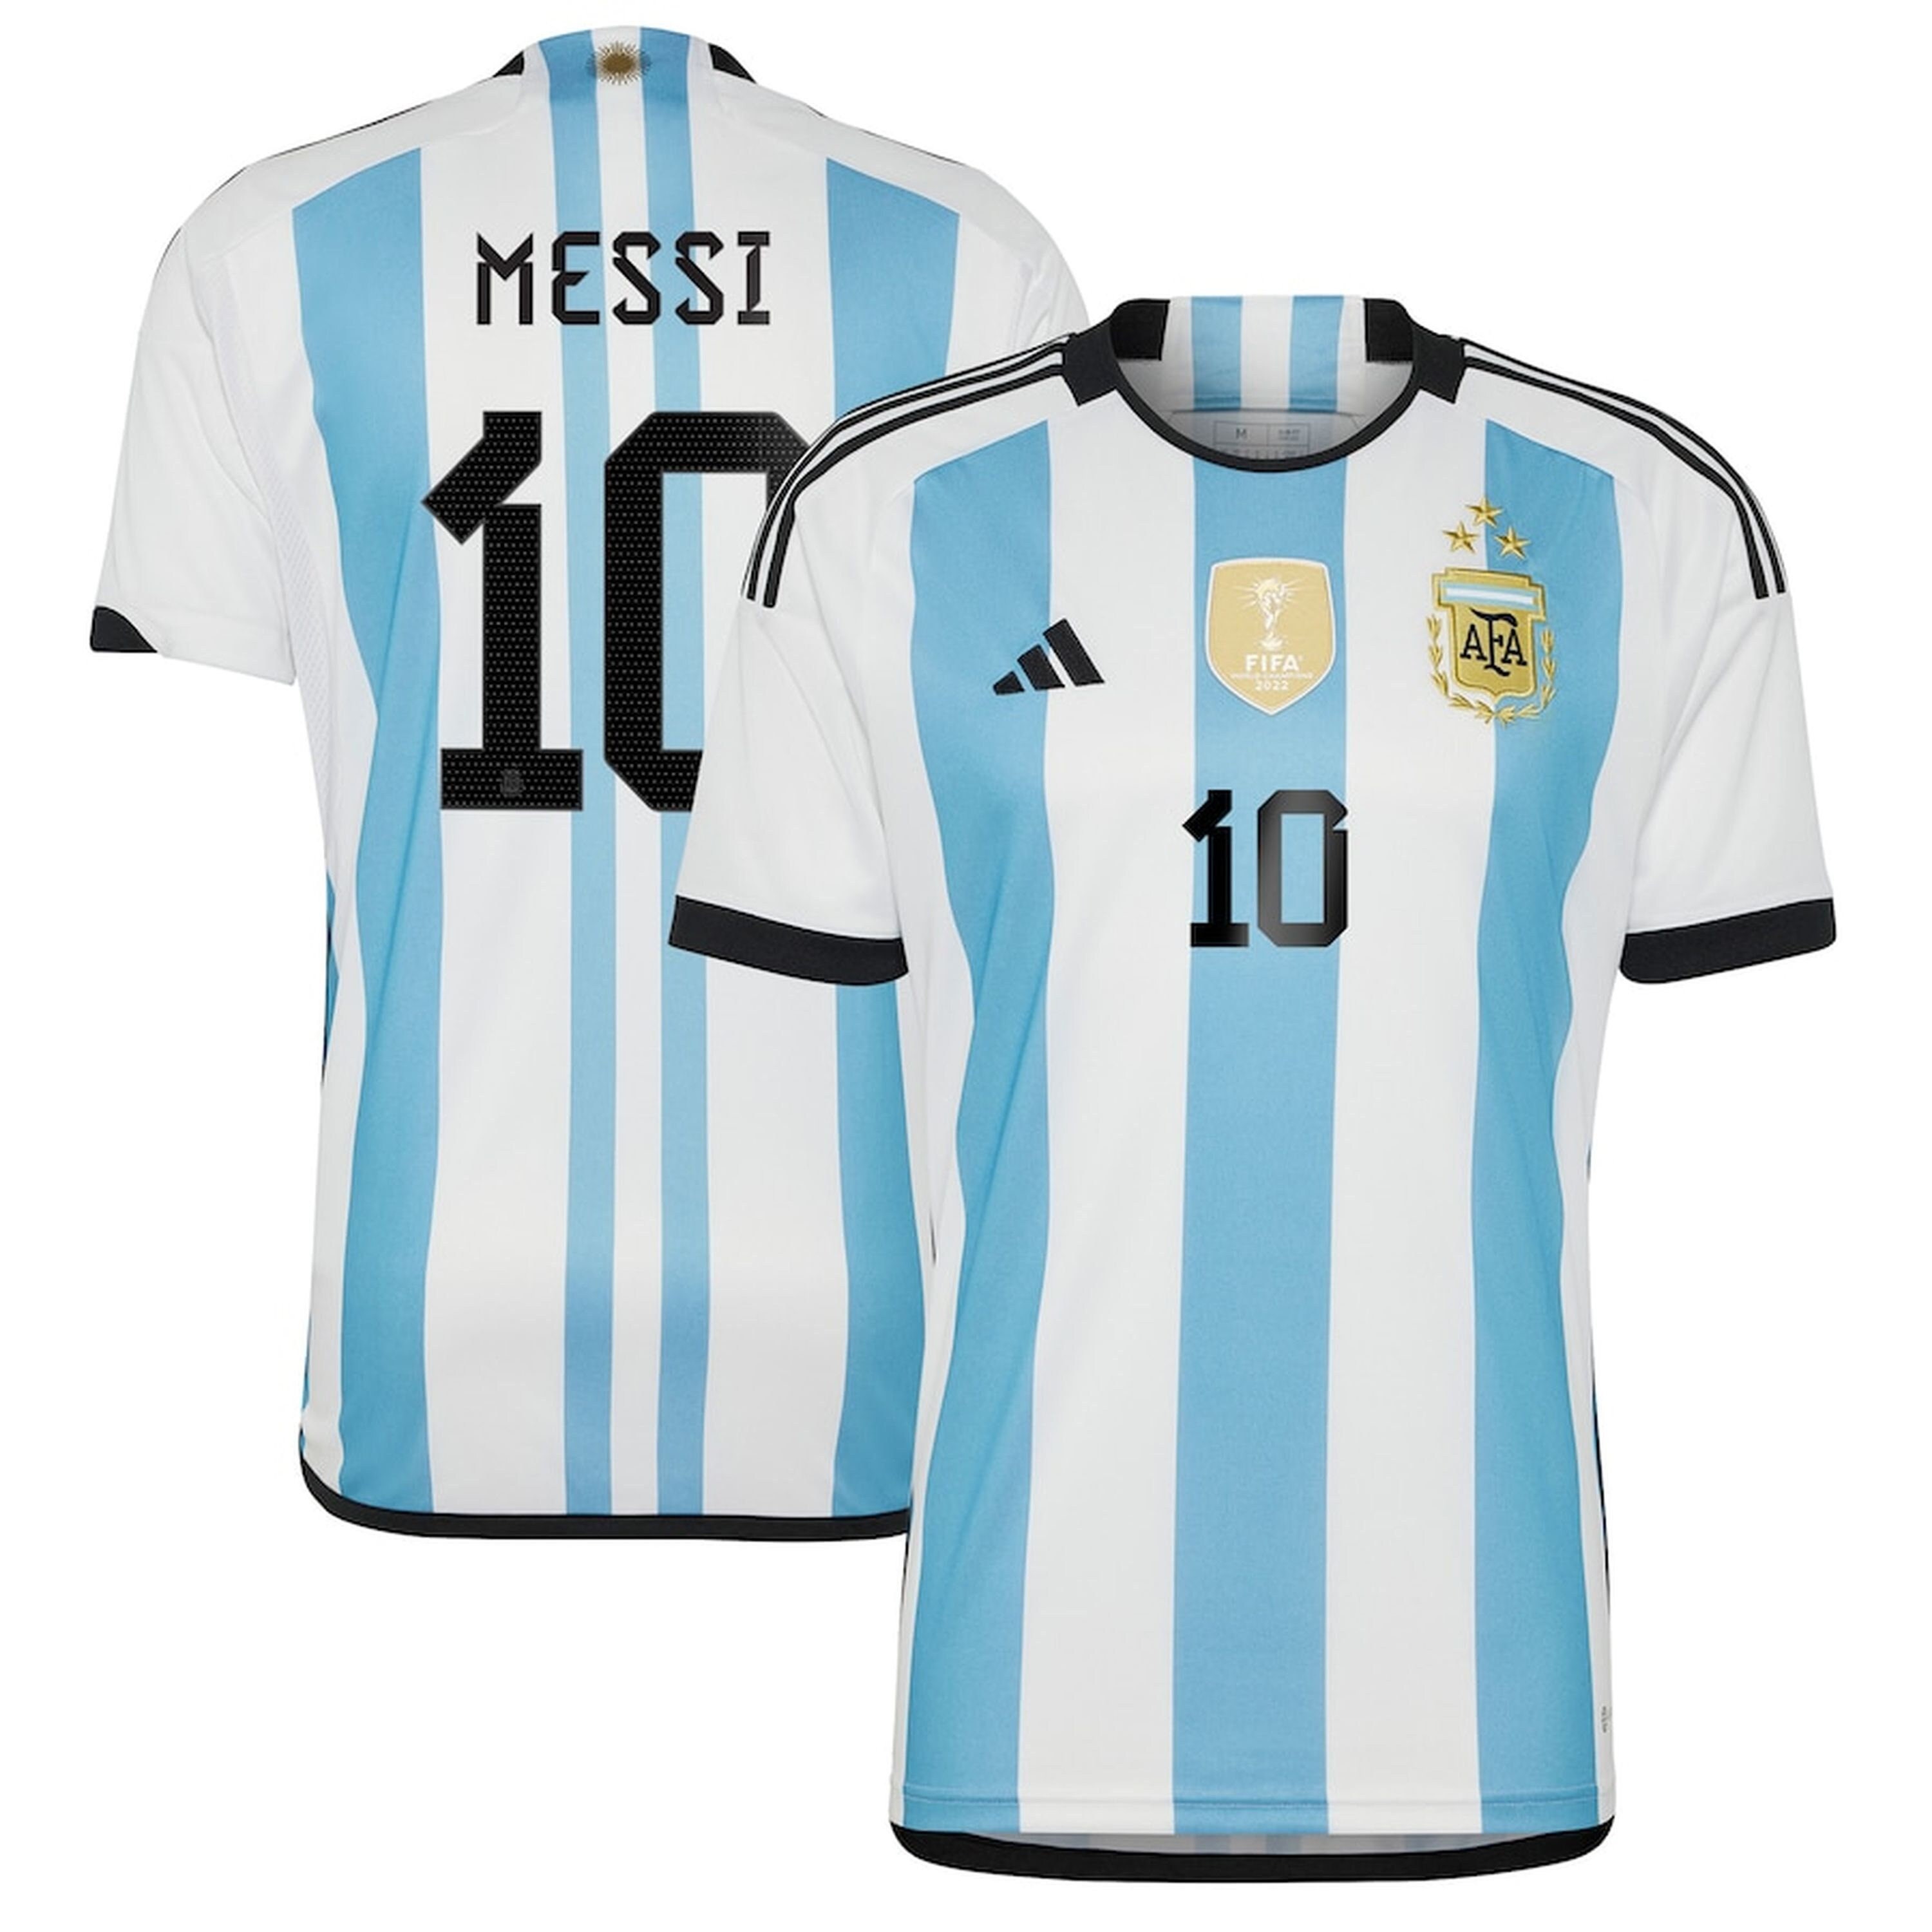 Messi 10 -